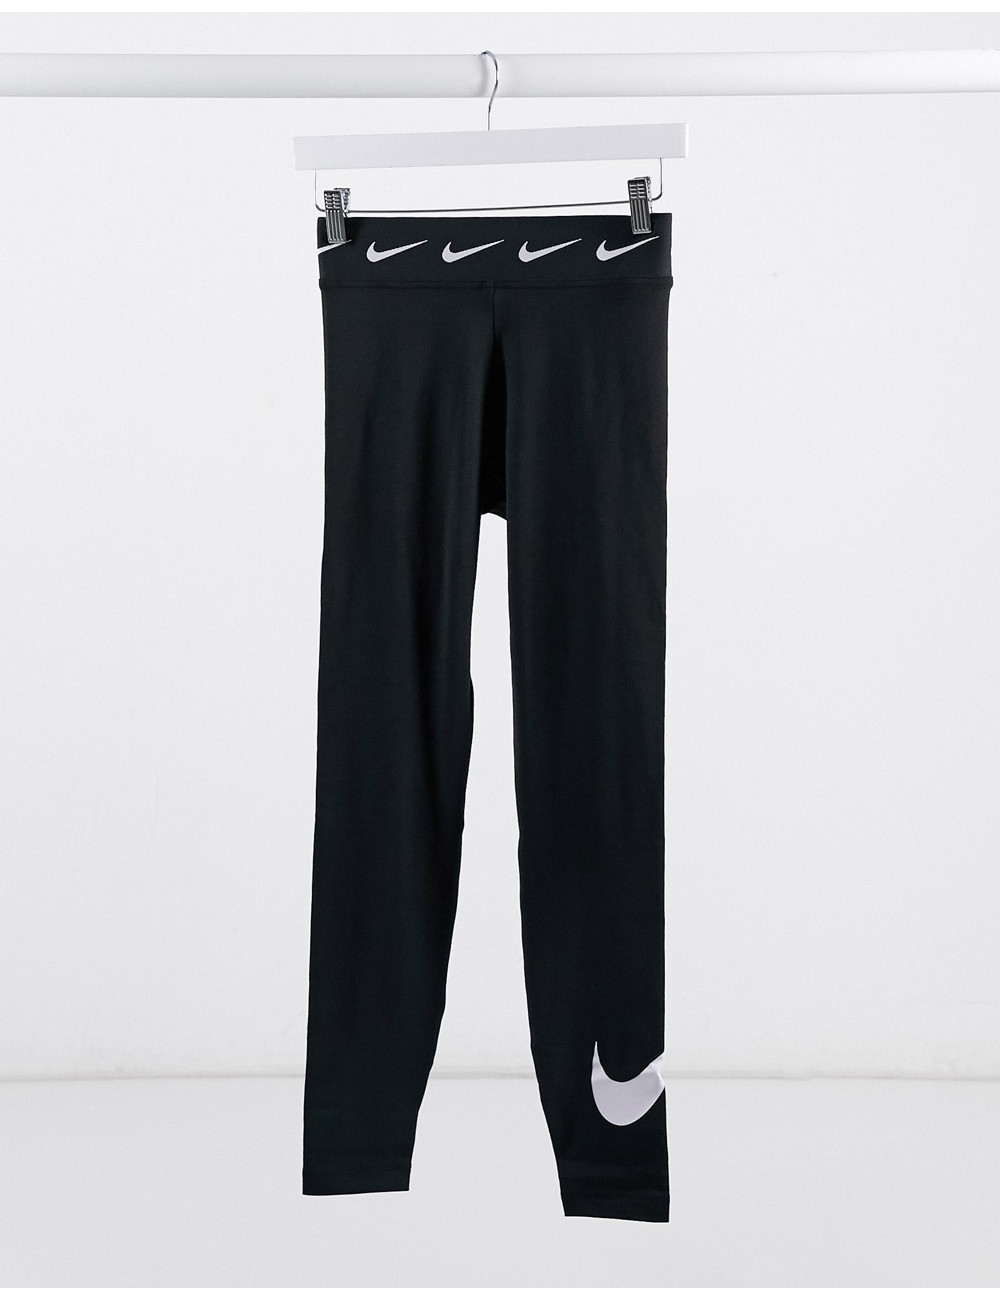 Nike high waisted legging...